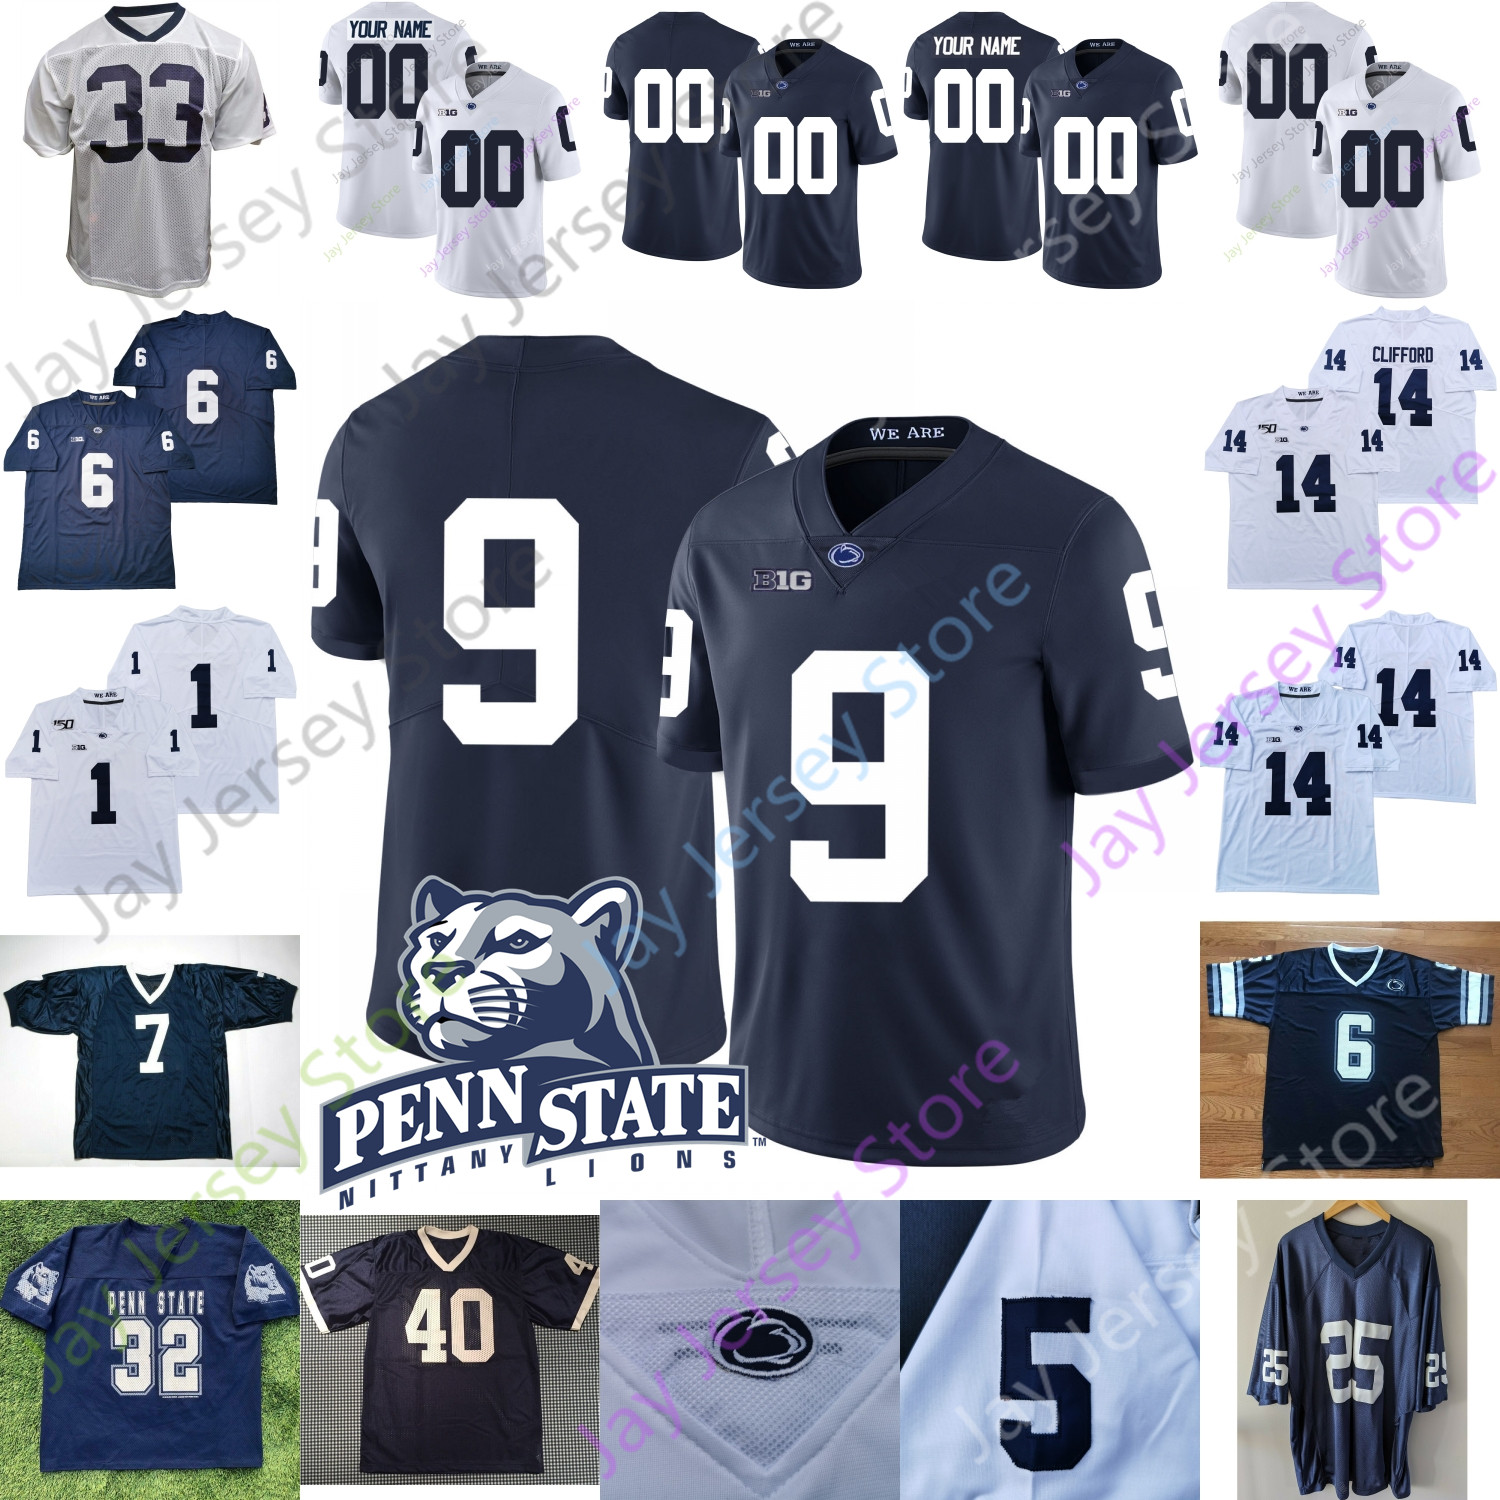 Discount Penn State Jerseys | Penn 